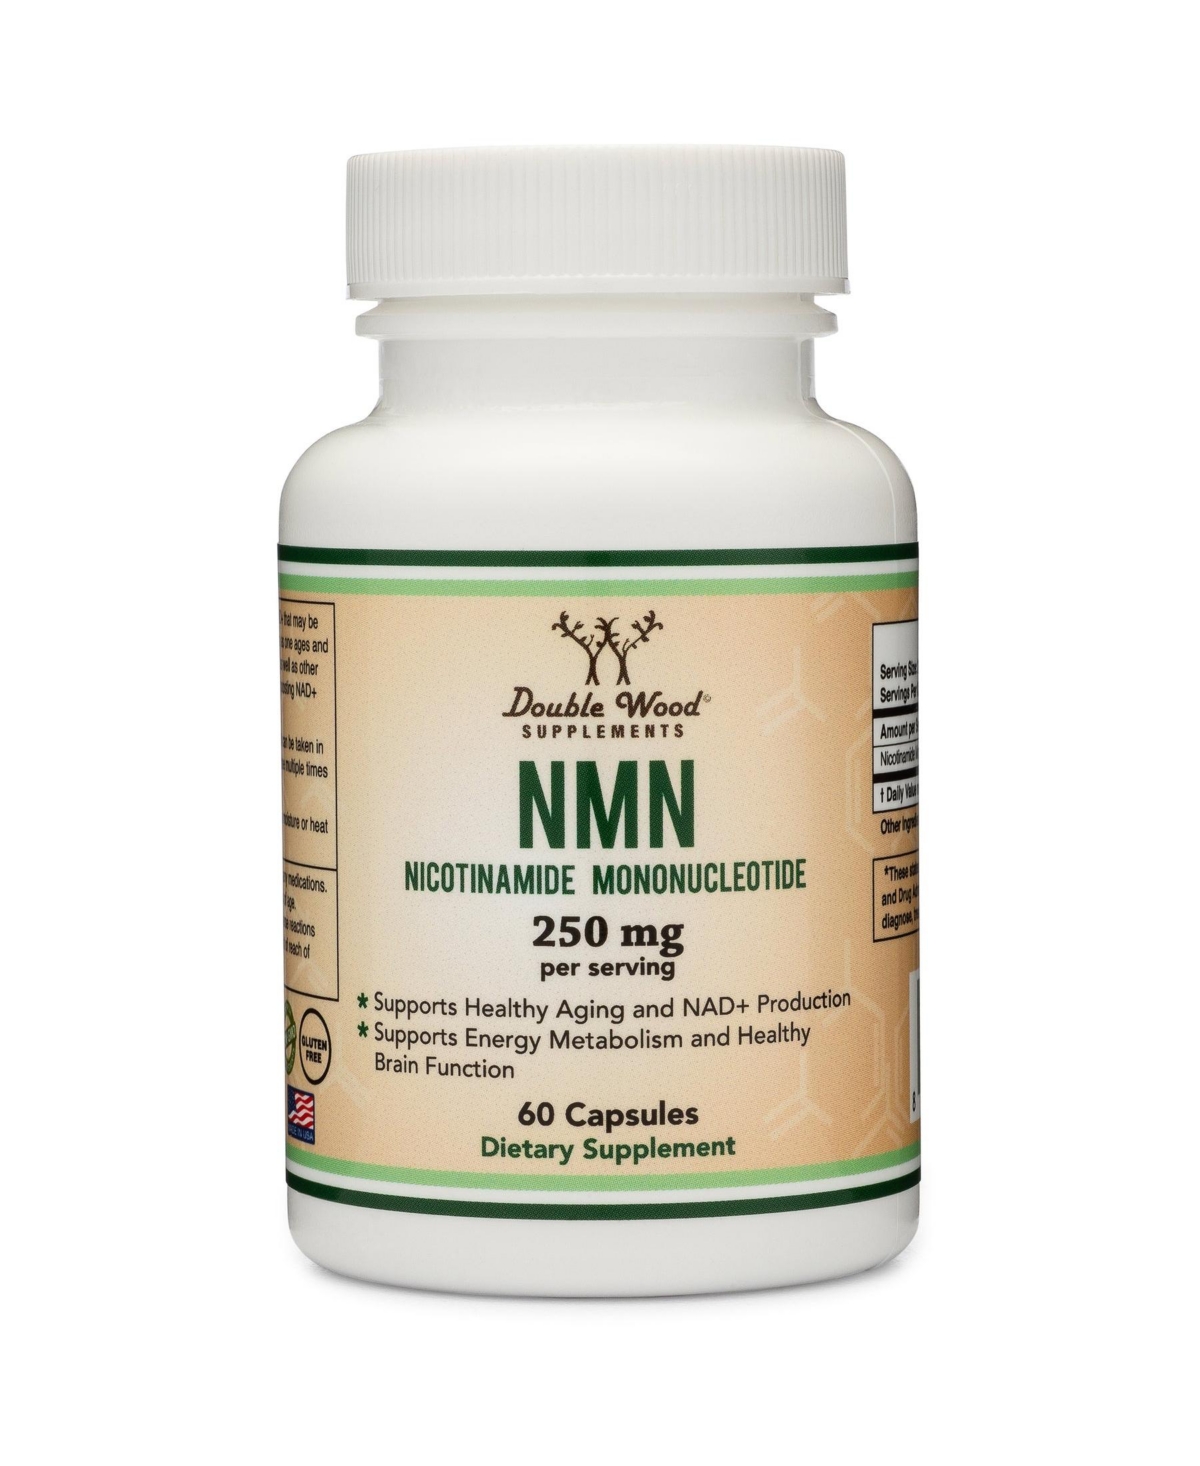 Nicotinamide Mononucleotide (Nmn) - 60 capsules, 250 mg servings